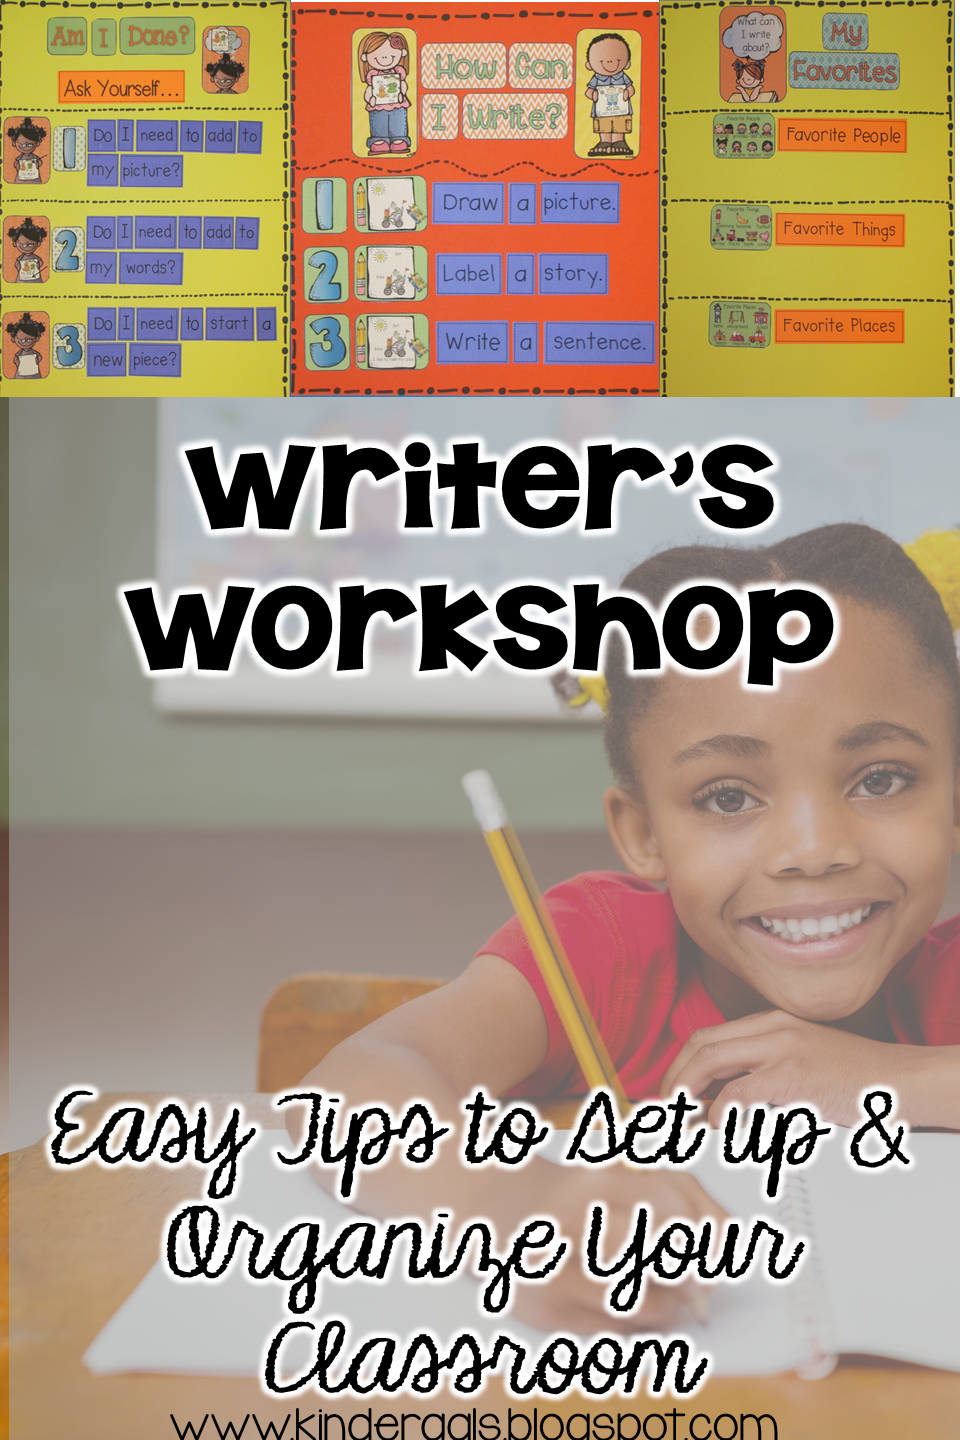 A Writer's Workshop Folder {PK-1}  Writing workshop, Writers workshop  folders, Writer workshop